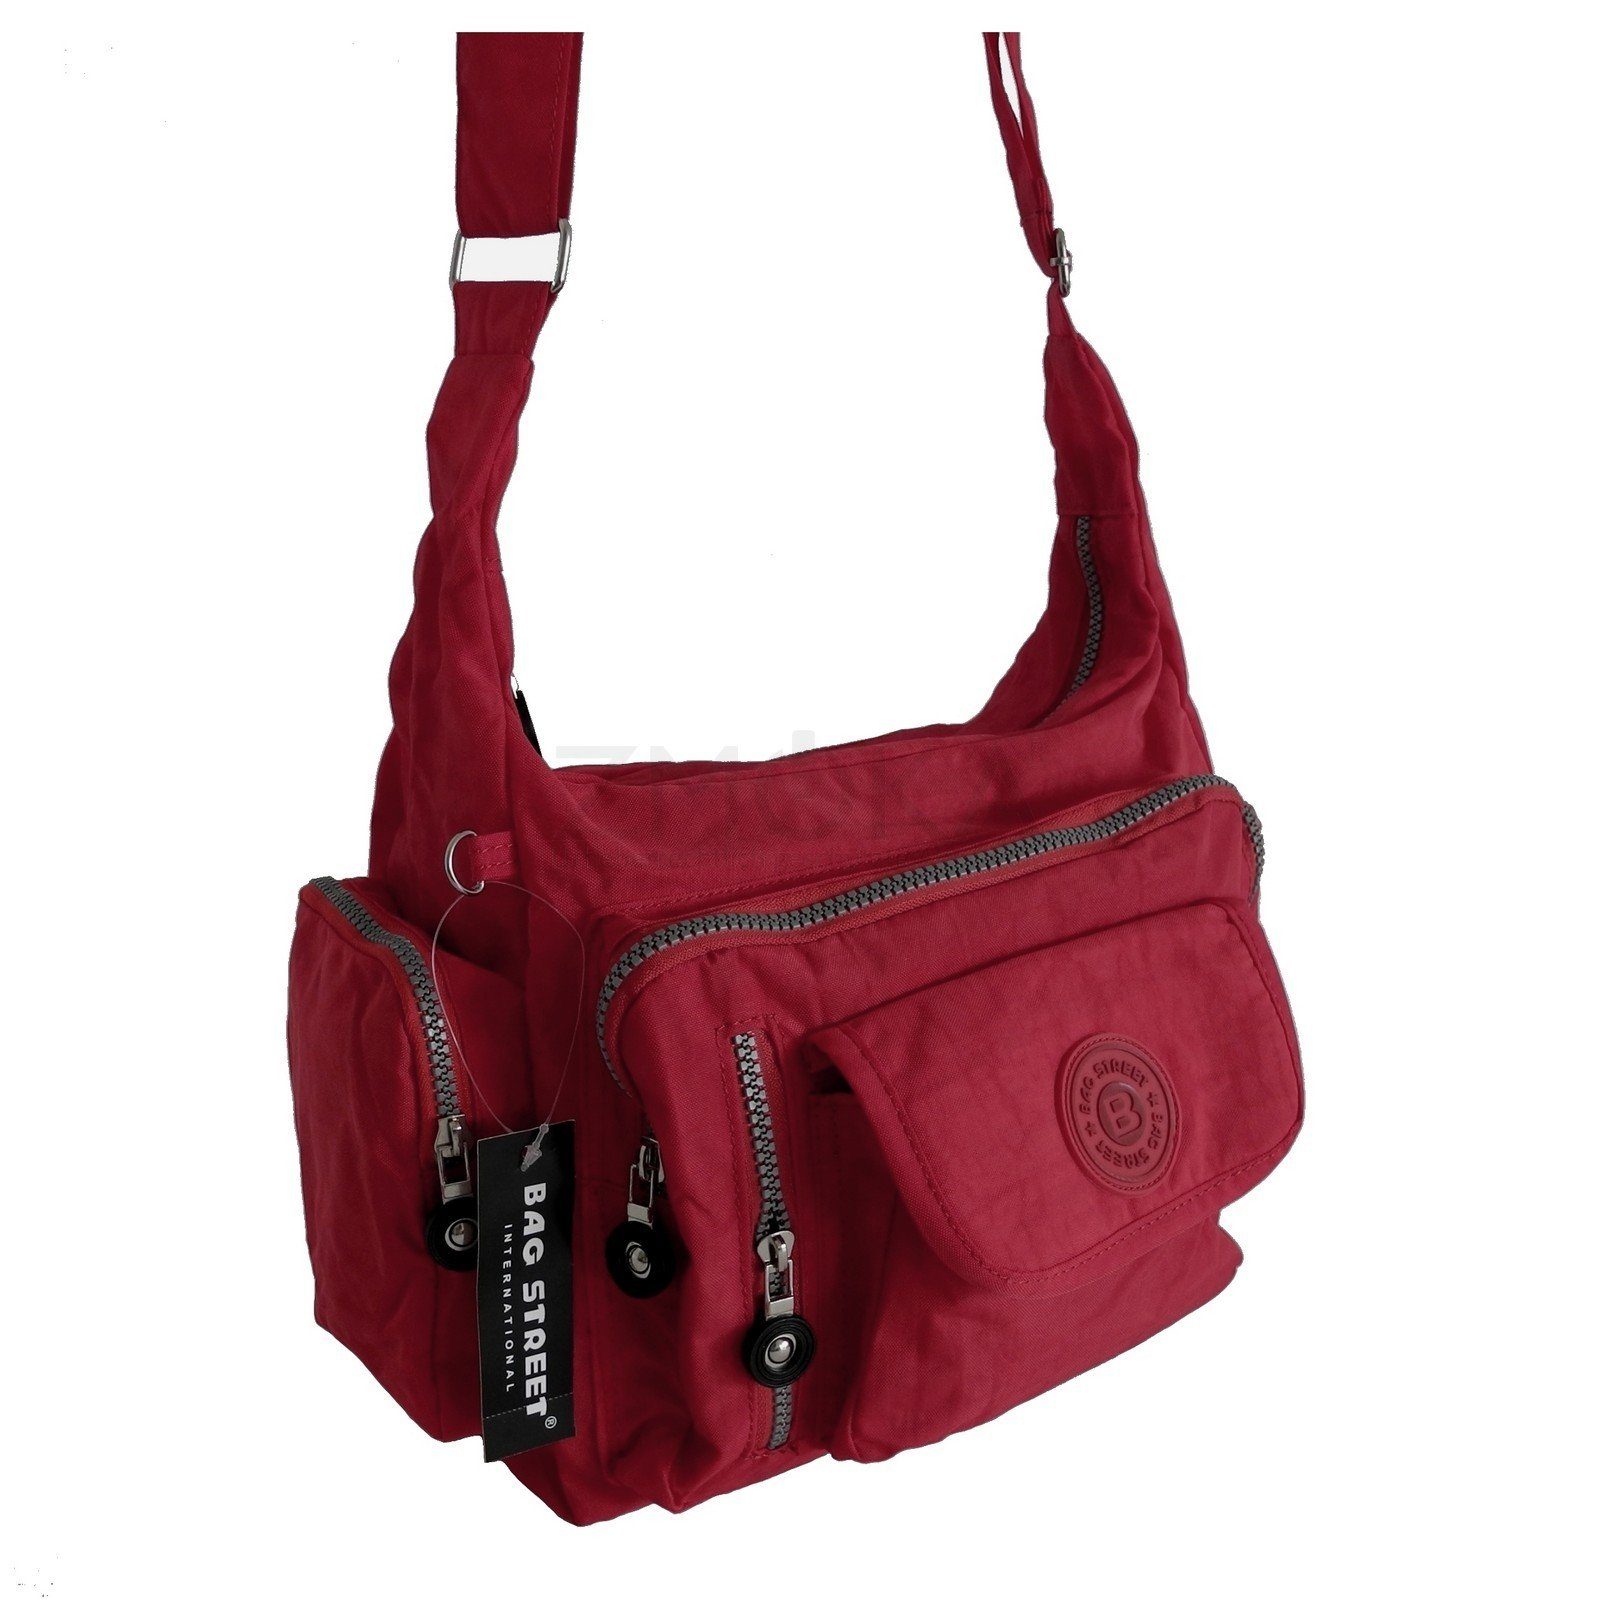 BAG STREET Umhängetasche Bag Street - Crossbody Bag Stofftasche Umhängetasche Schultertasche Rot